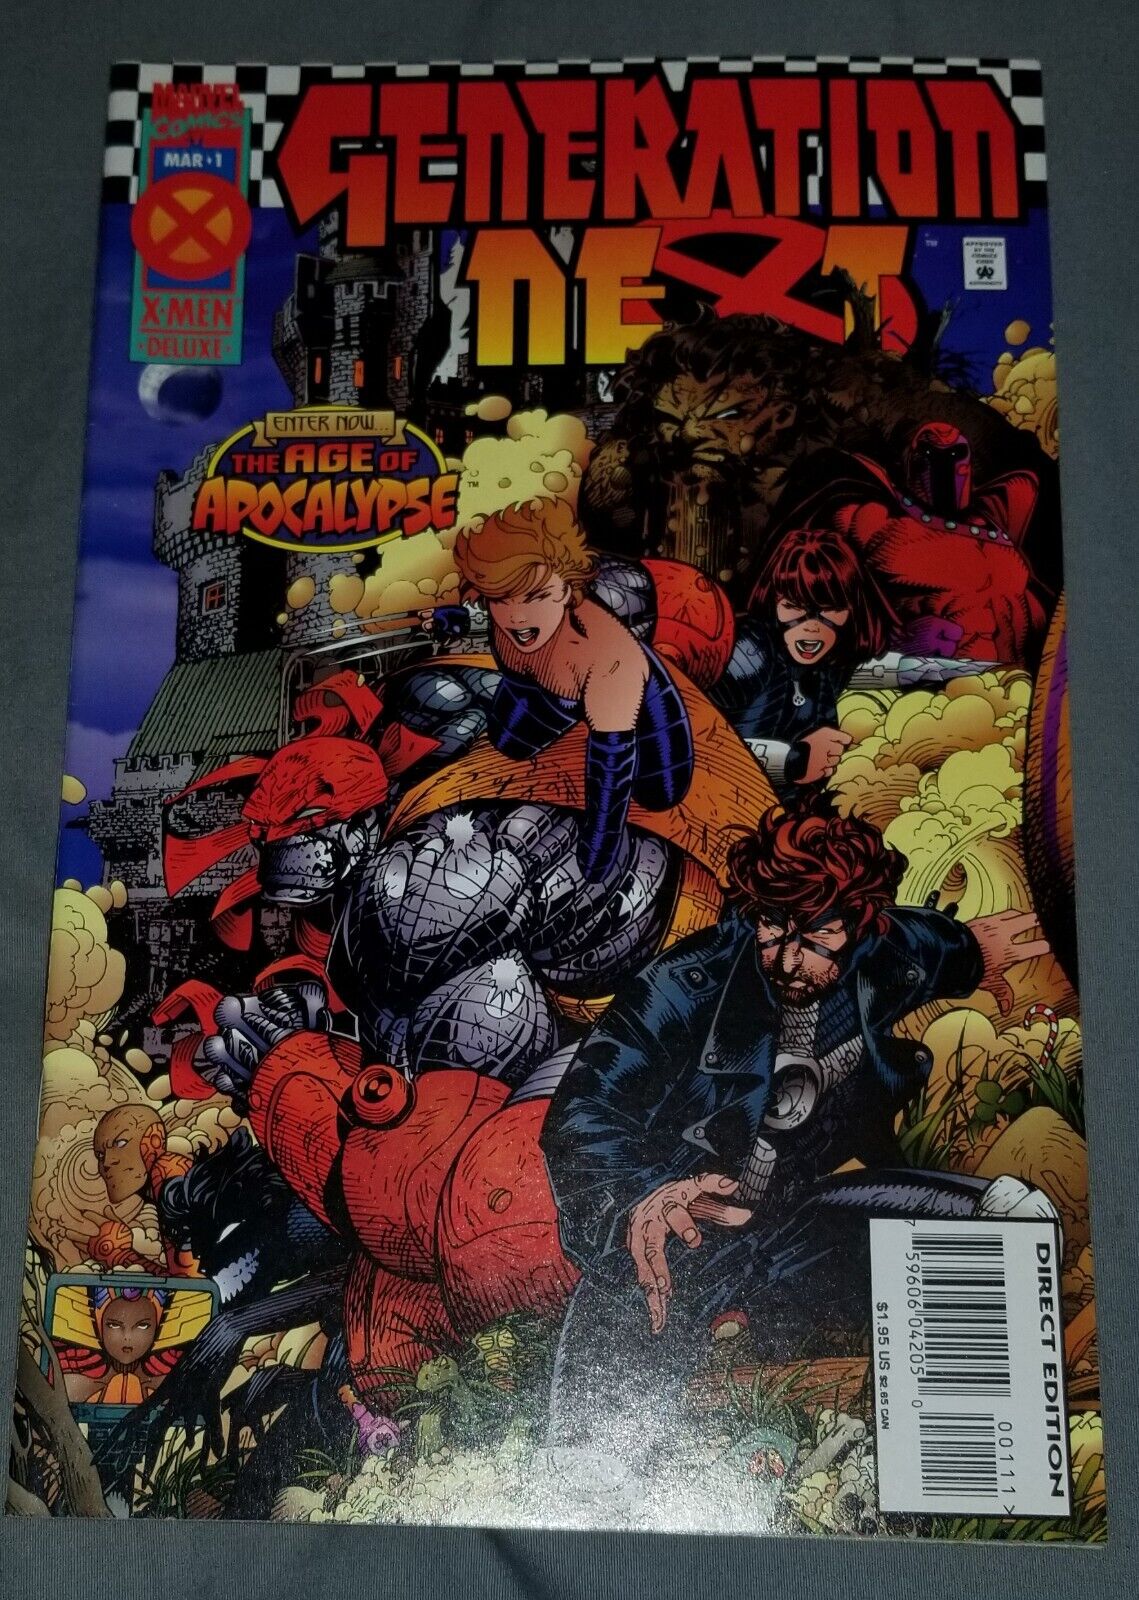 Generation Next #1 (Marvel, March 1995)